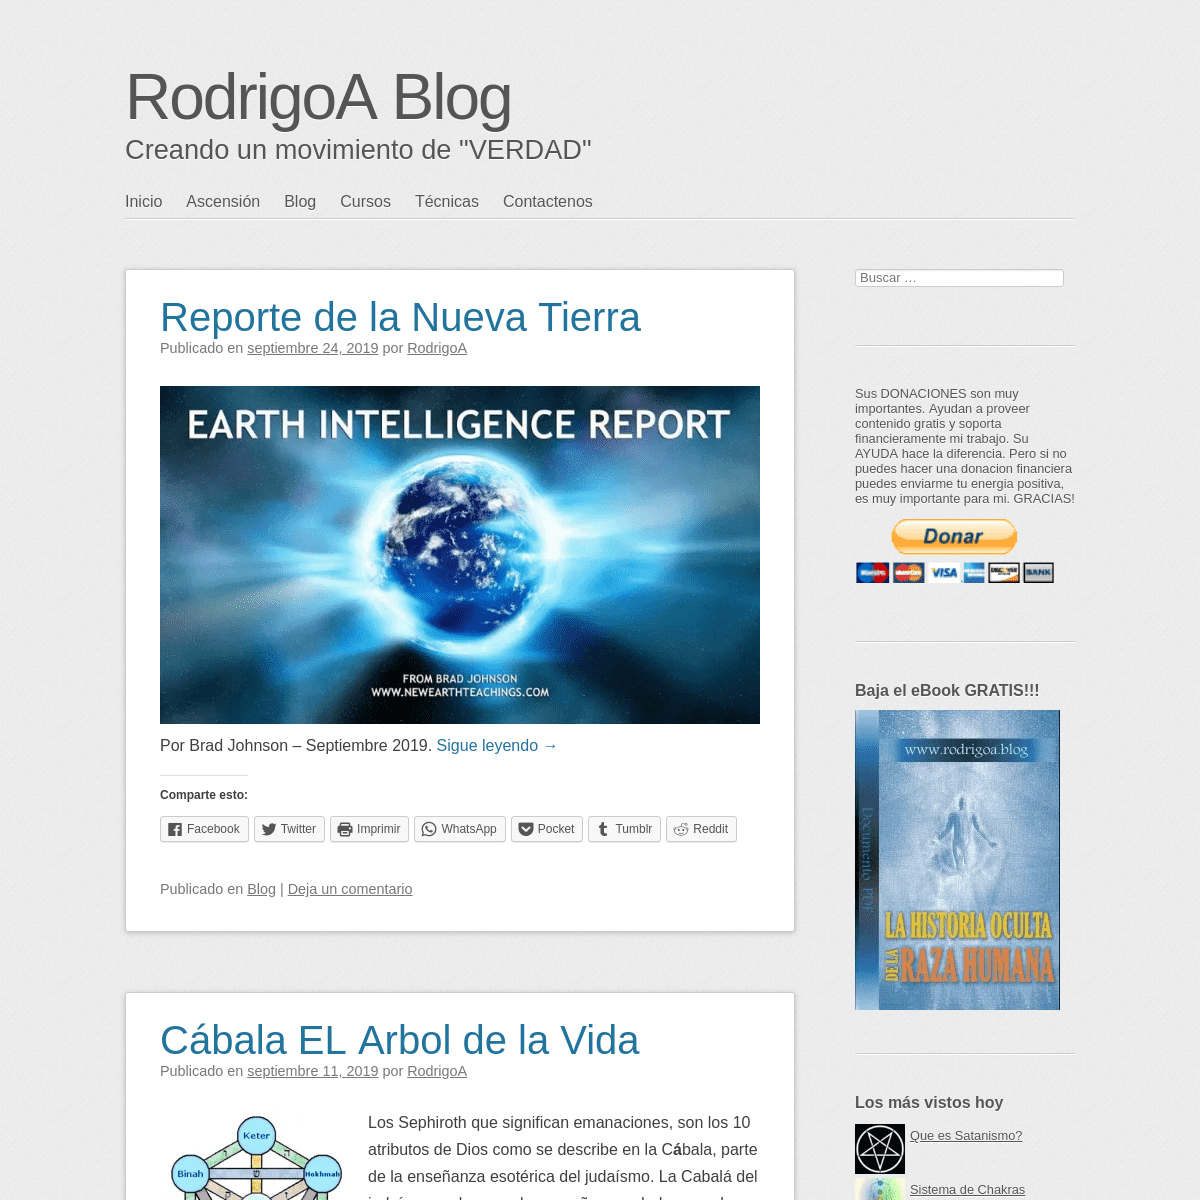 A complete backup of rodrigoa.blog